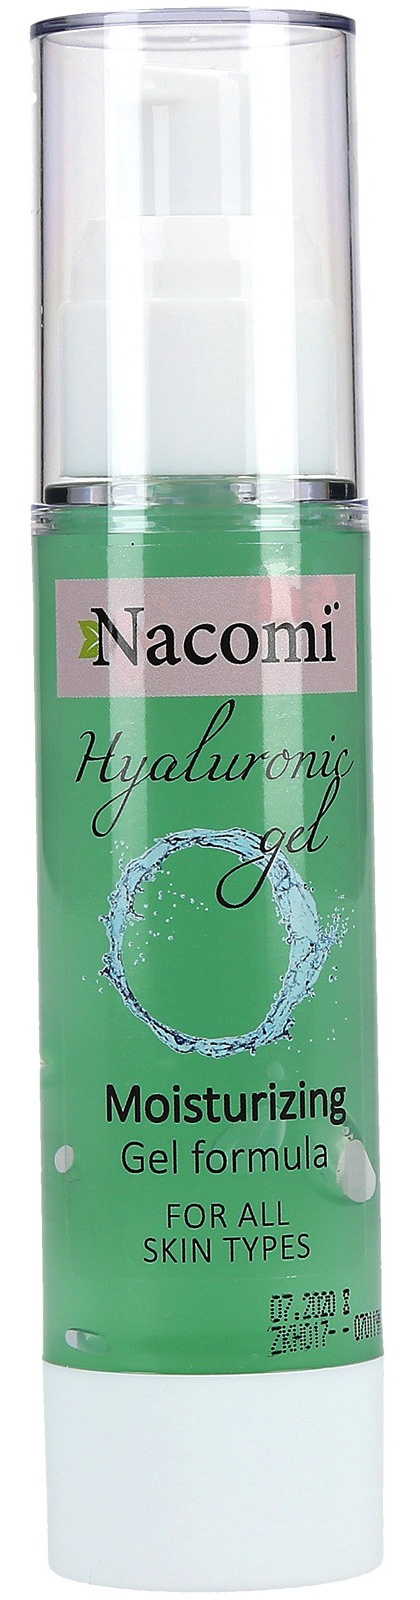 Nacomi Moisturizing Hyaluronic Gel